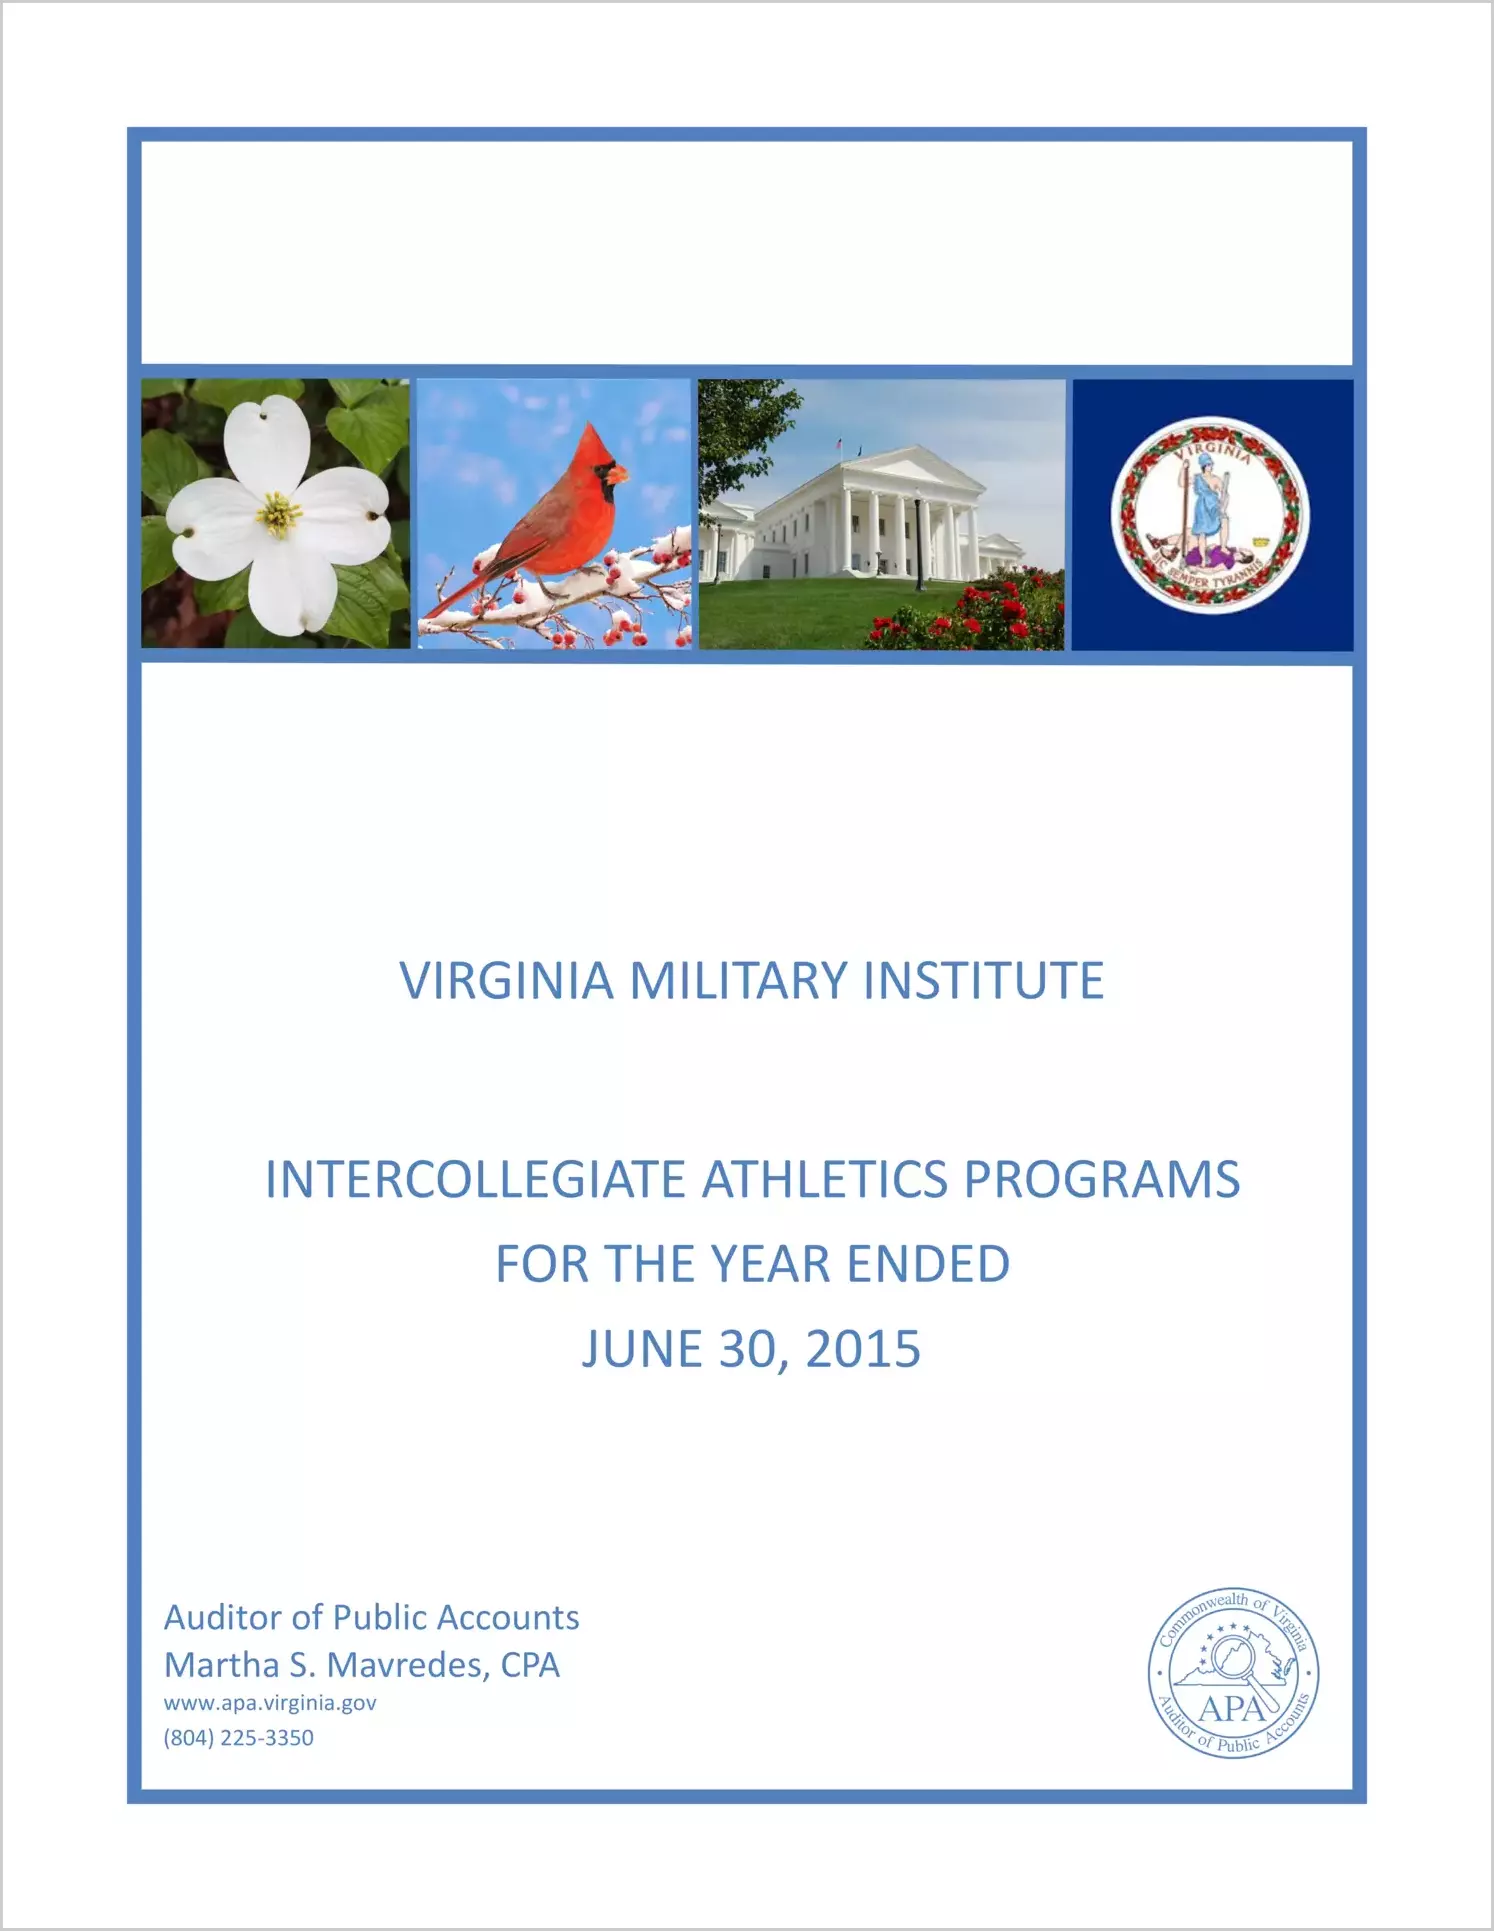 Virginia Military Institute Intercollegiate Athletics Programs for the year ended June 30, 2015